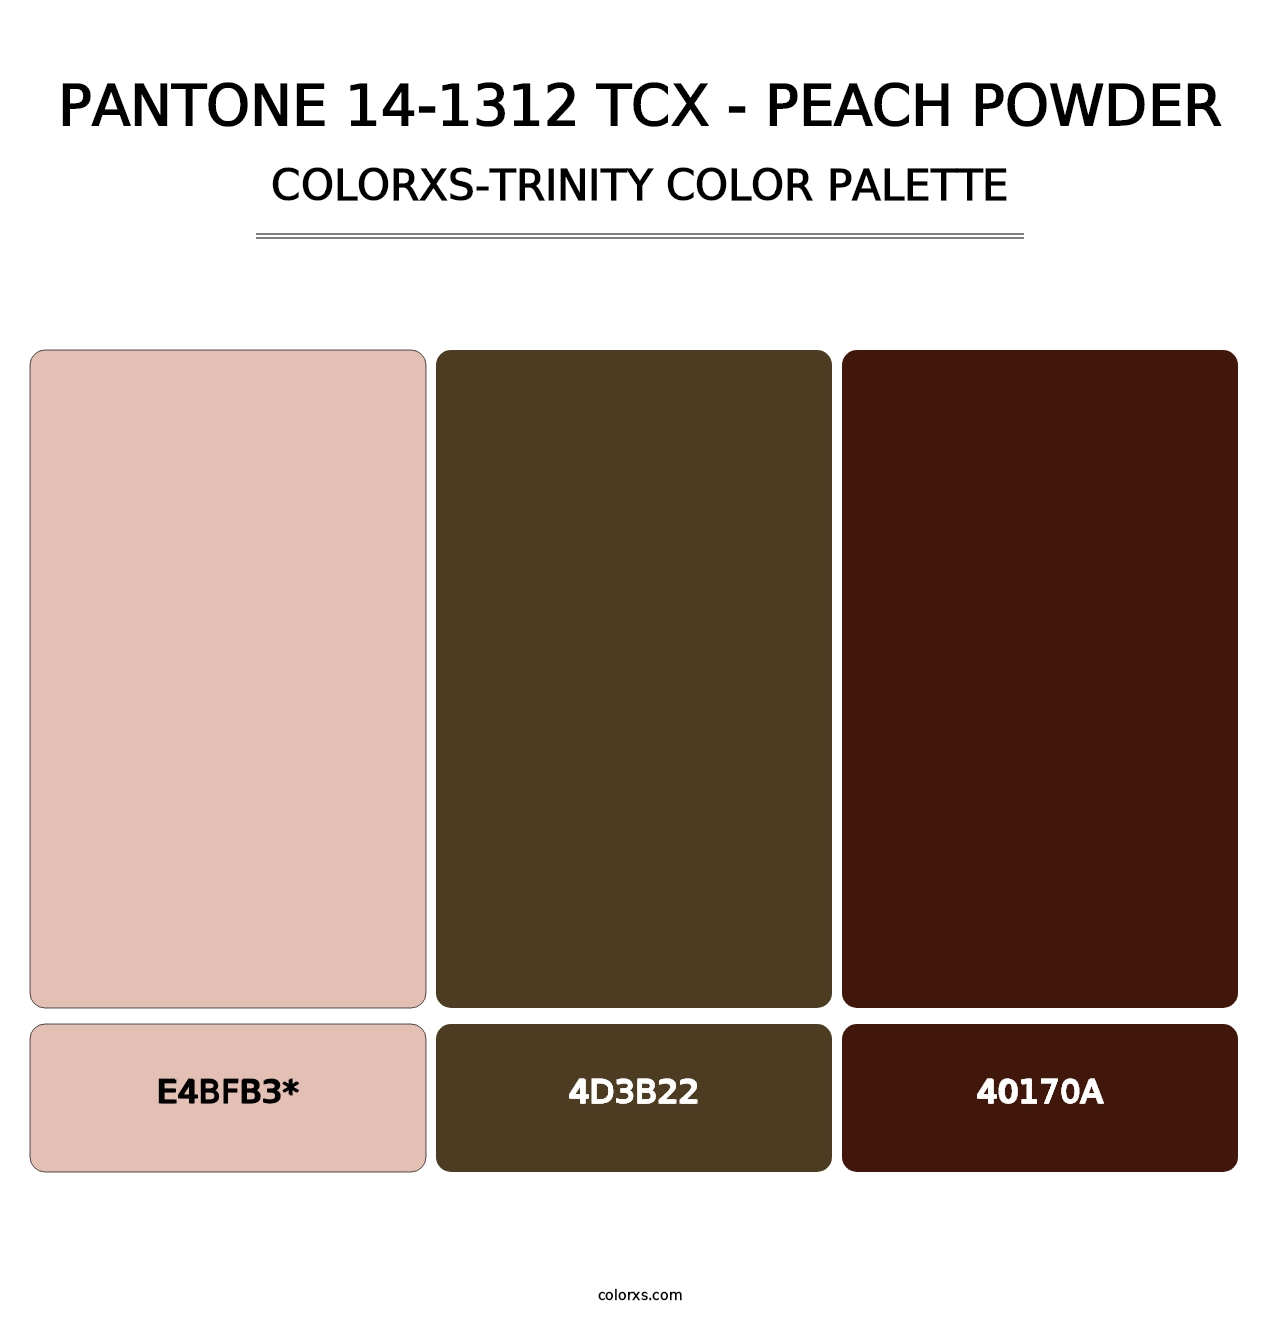 PANTONE 14-1312 TCX - Peach Powder - Colorxs Trinity Palette